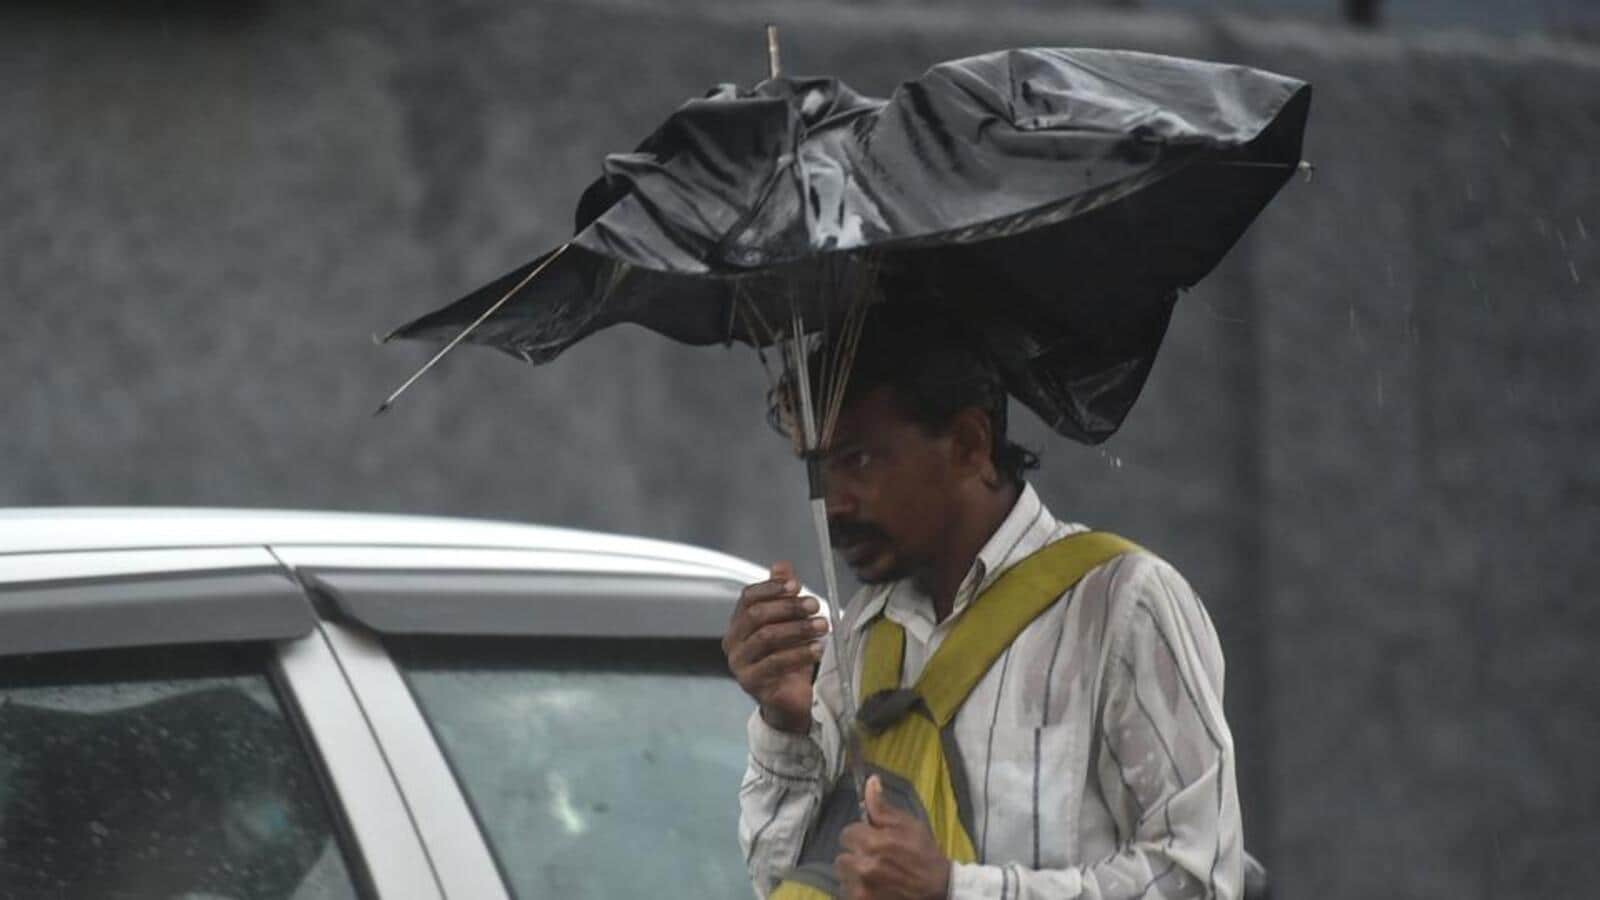 Delhi rains: Wind speeds touching 75 km/hr cause significant drop in temperature | Latest News Delhi